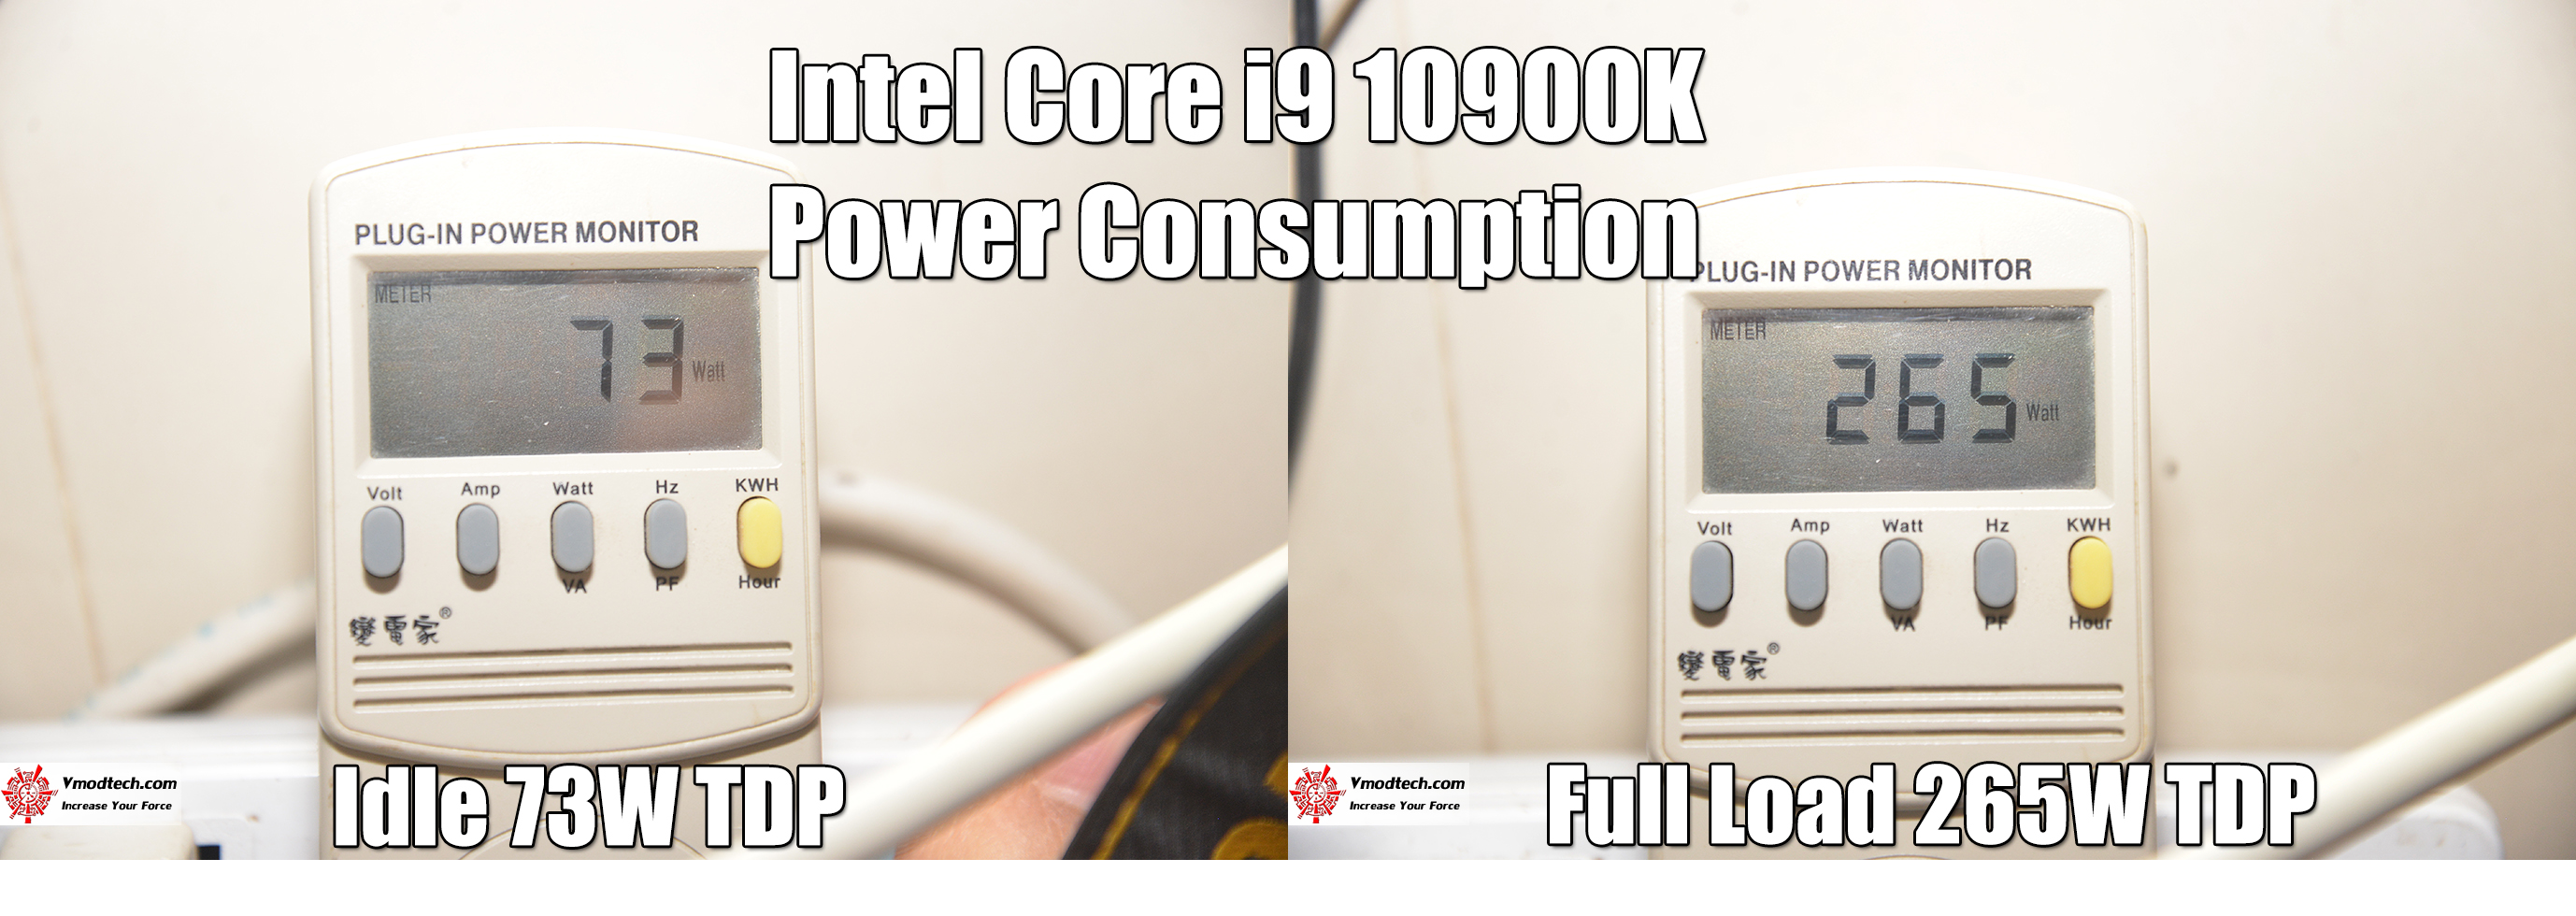 power consumption INTEL CORE i9 10900K PROCESSOR REVIEW